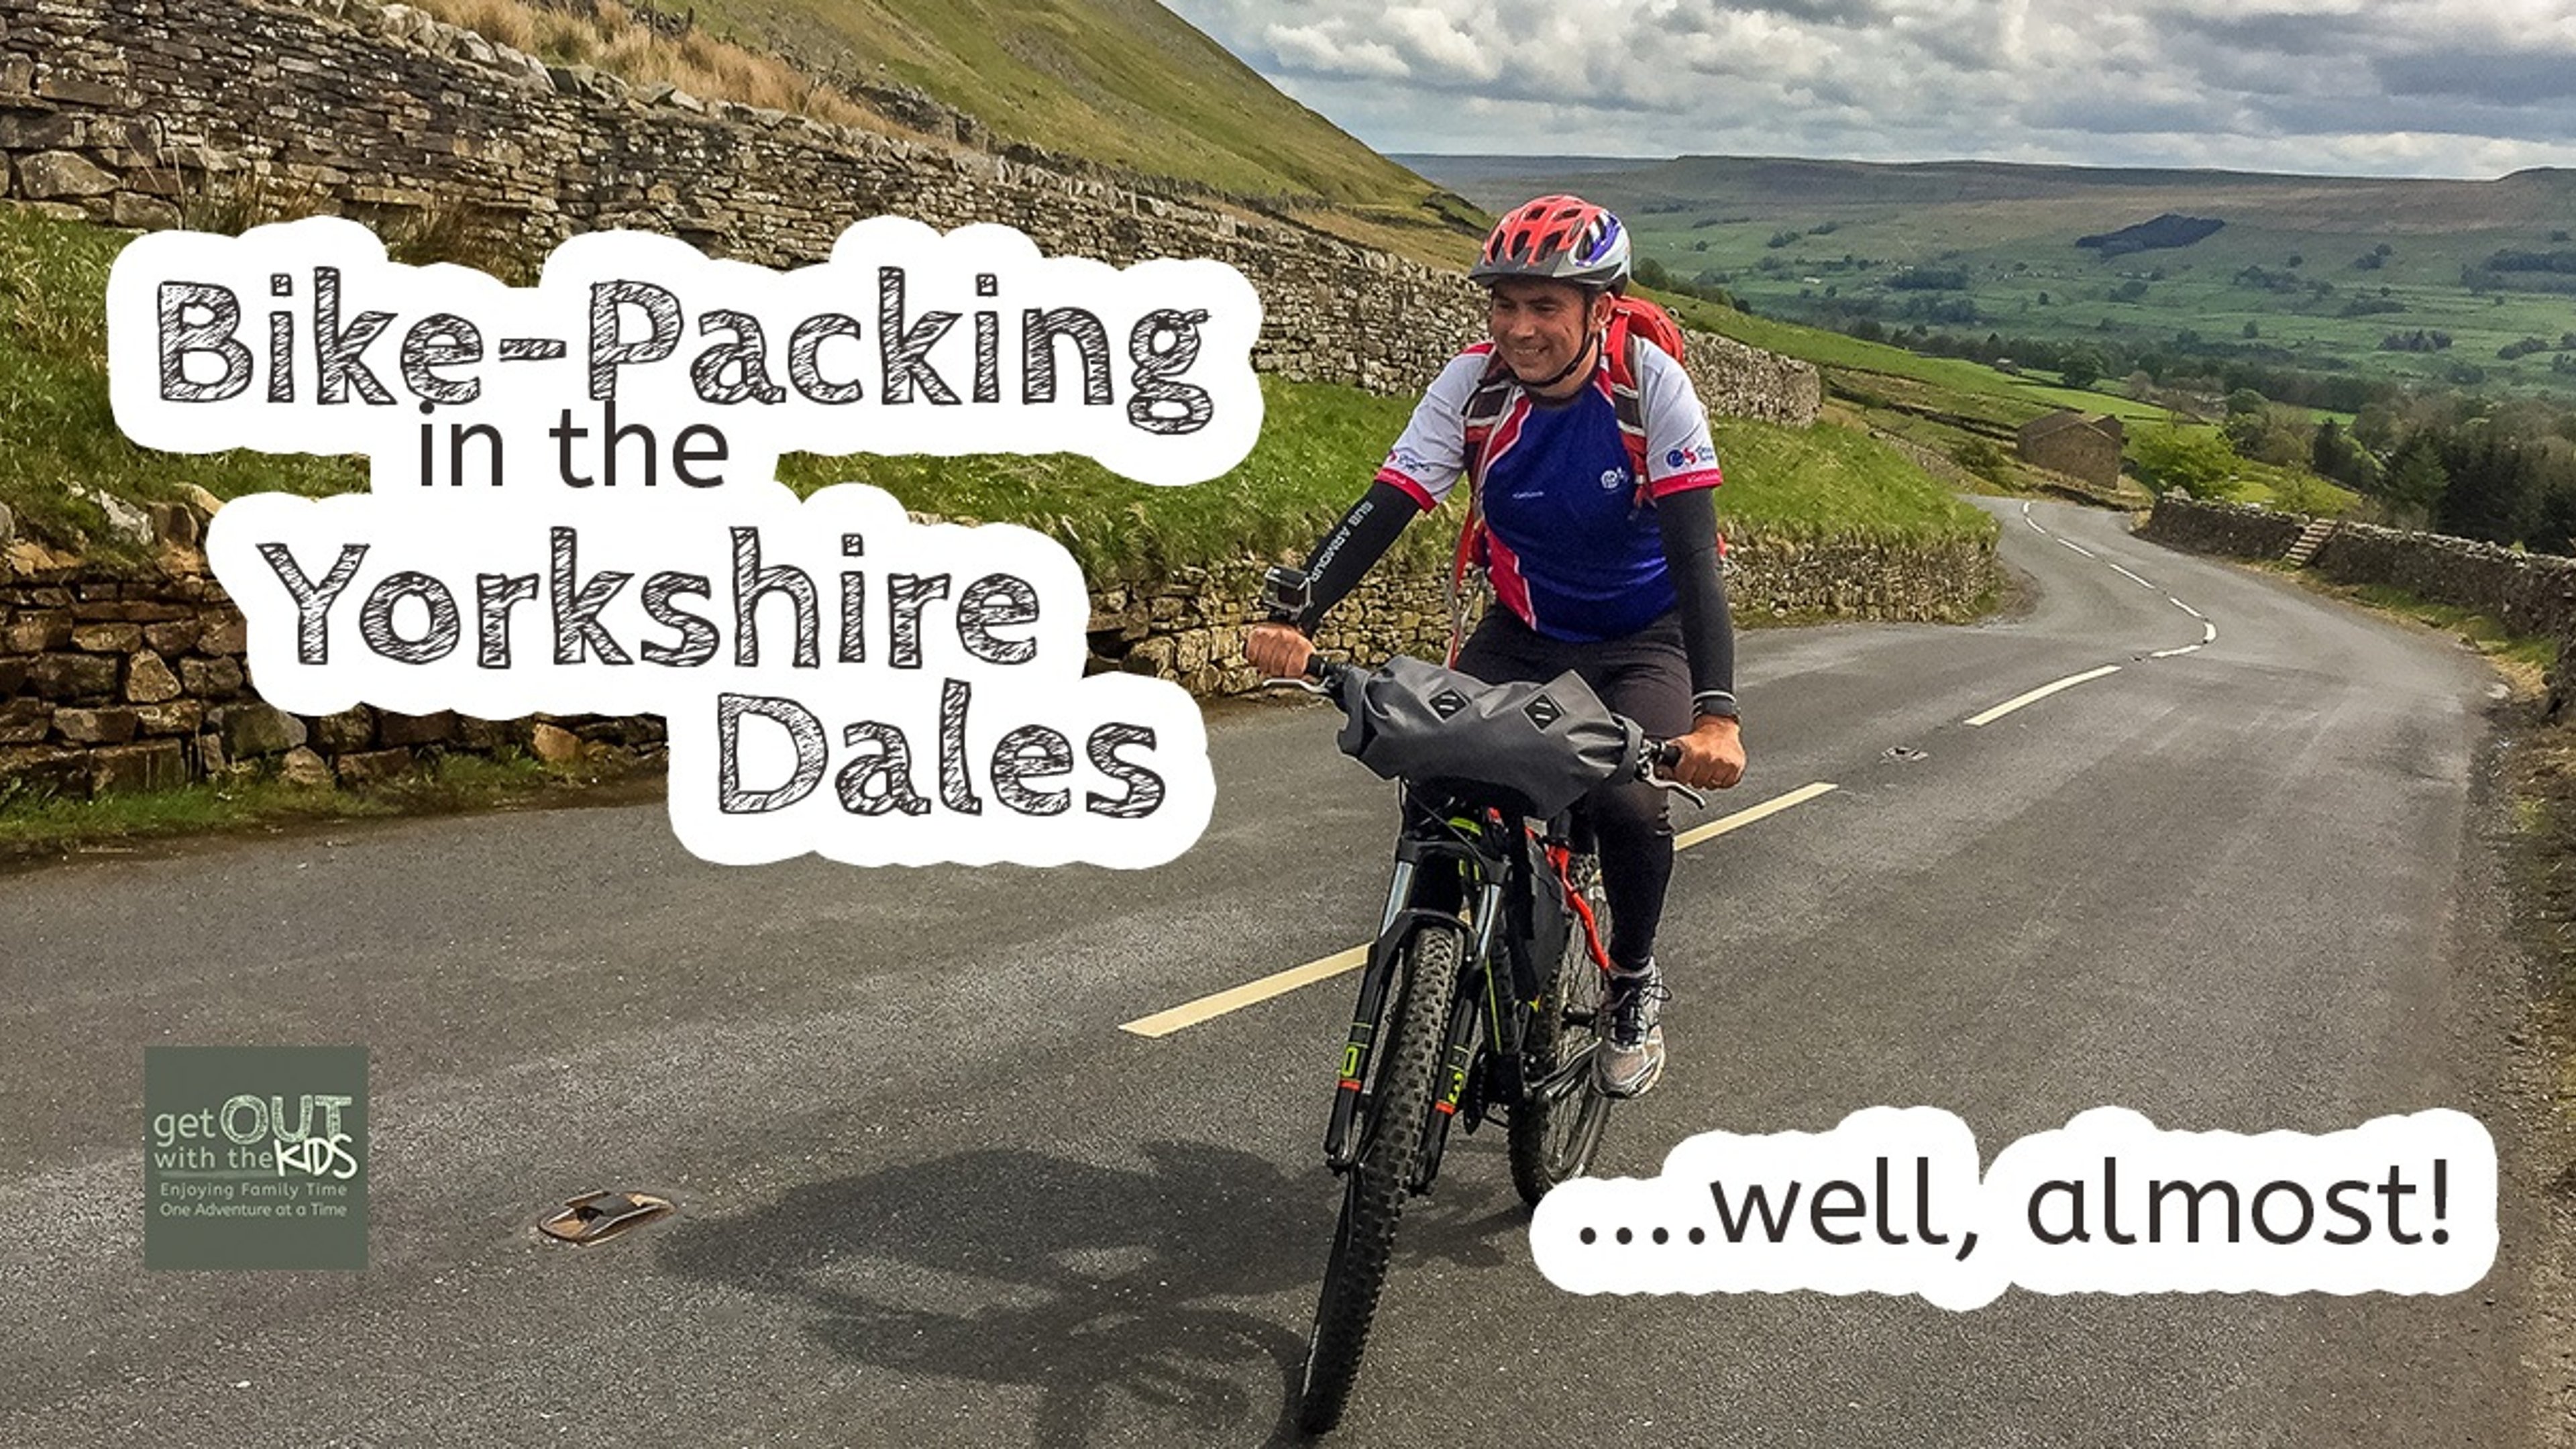 Bike Packing Yorkshire Dales